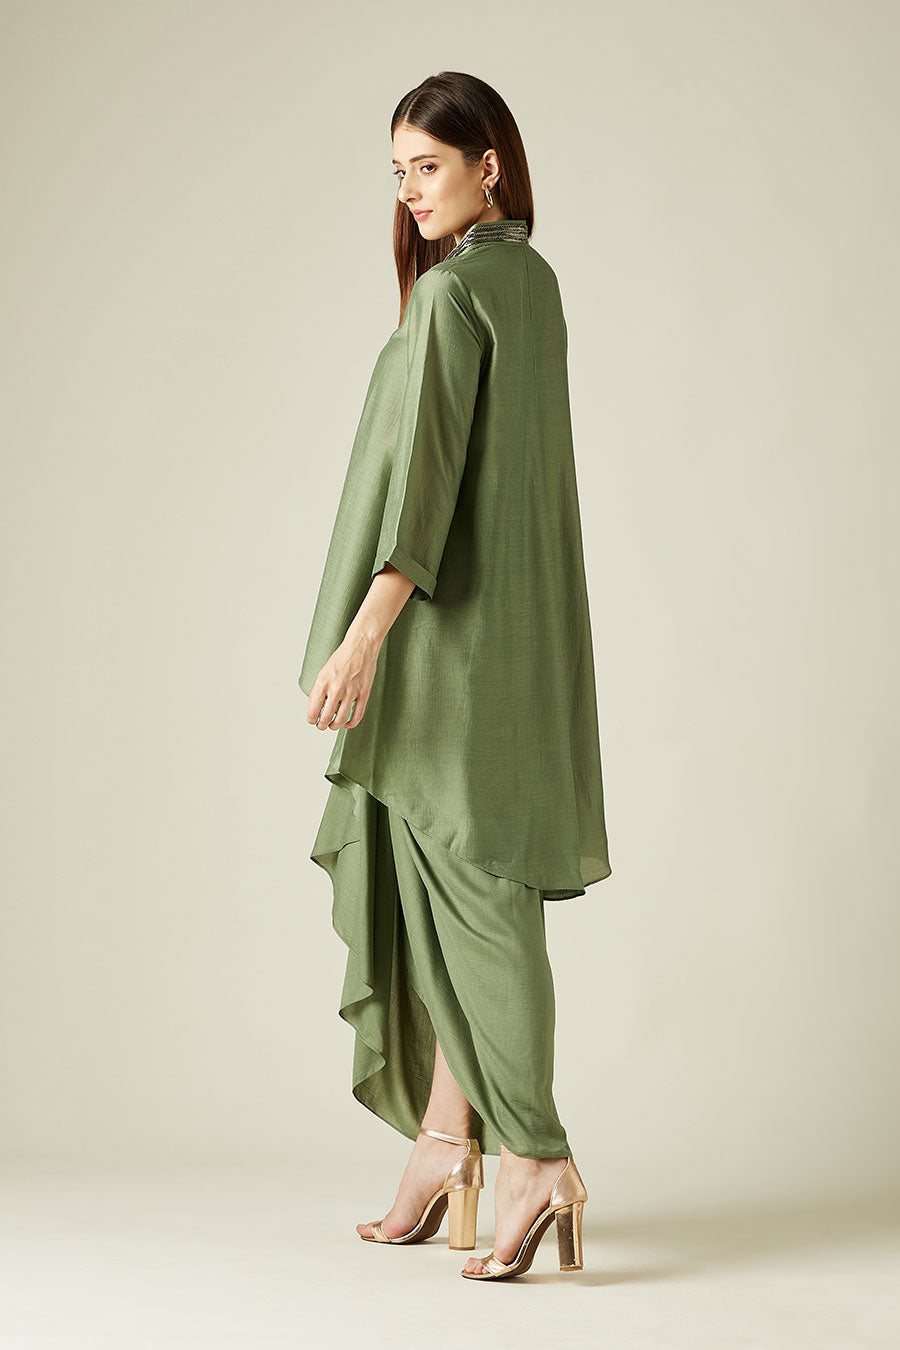 Fern Green Tunic & Drape Skirt Co-Ord Set